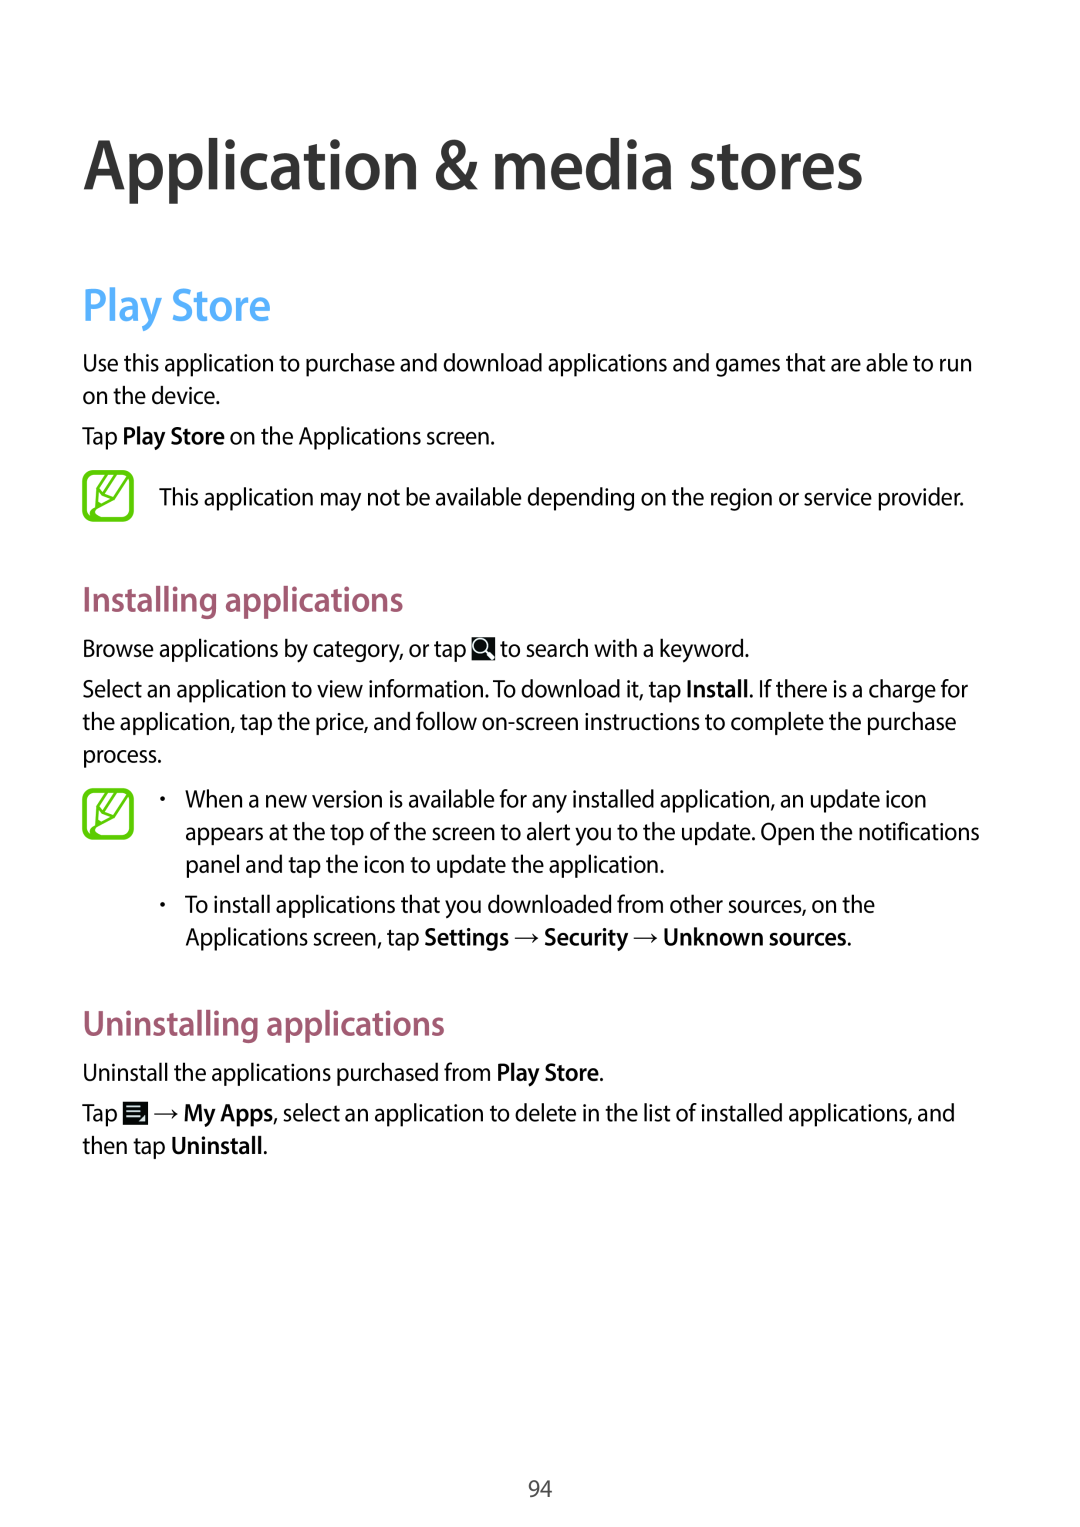 Samsung EK-GC100 user manual Application & media stores, Play Store, Installing applications, Uninstalling applications 